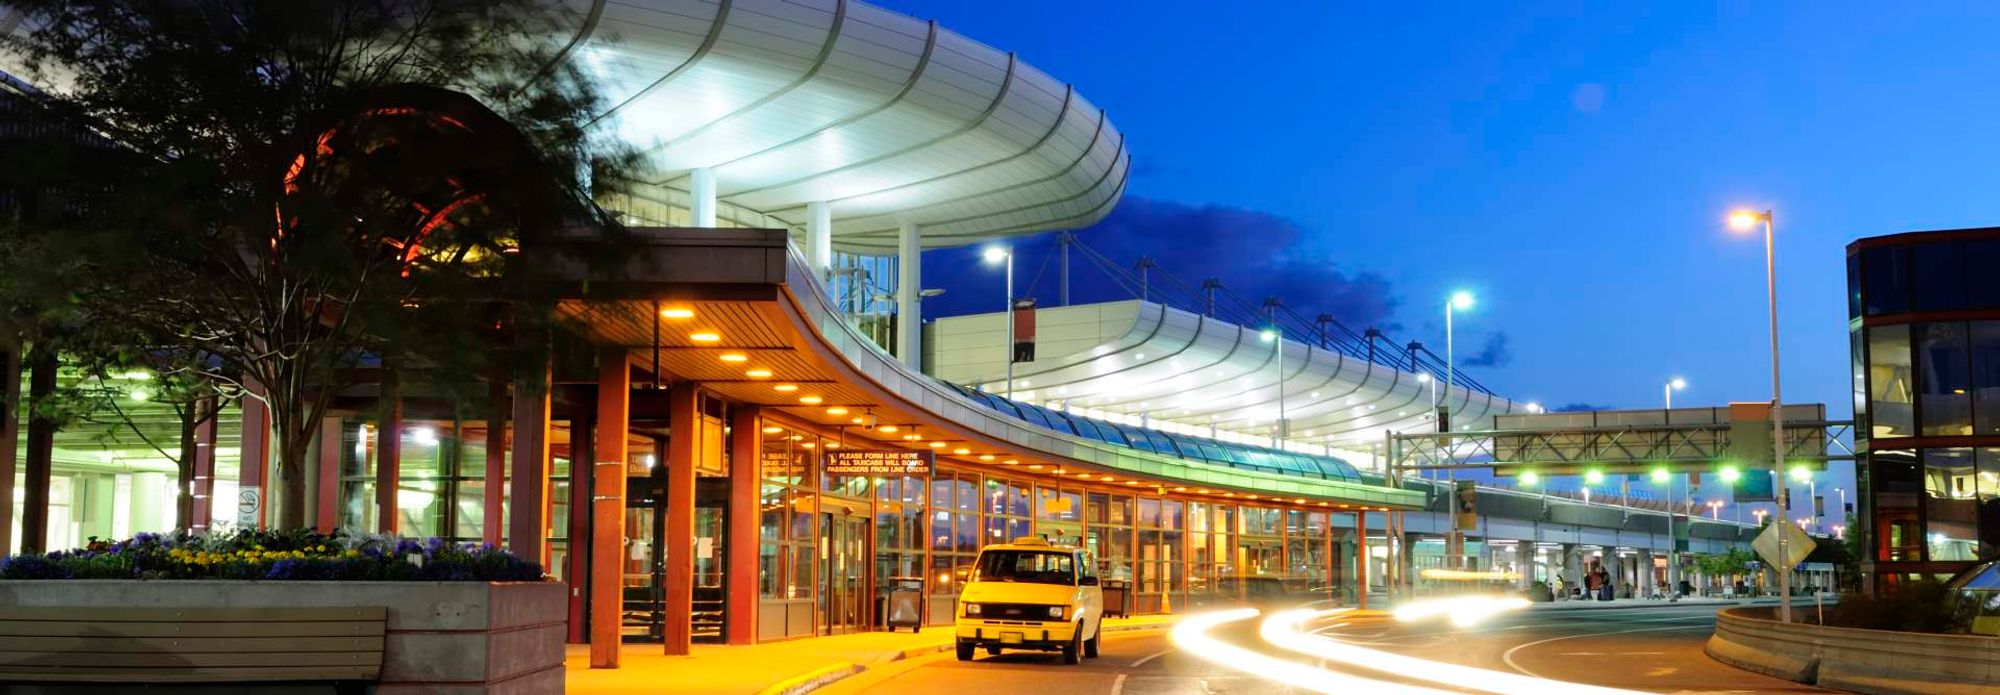 Ted Stevens Anchorage International Airport (ANC) (أنكوراج) (Arabic)